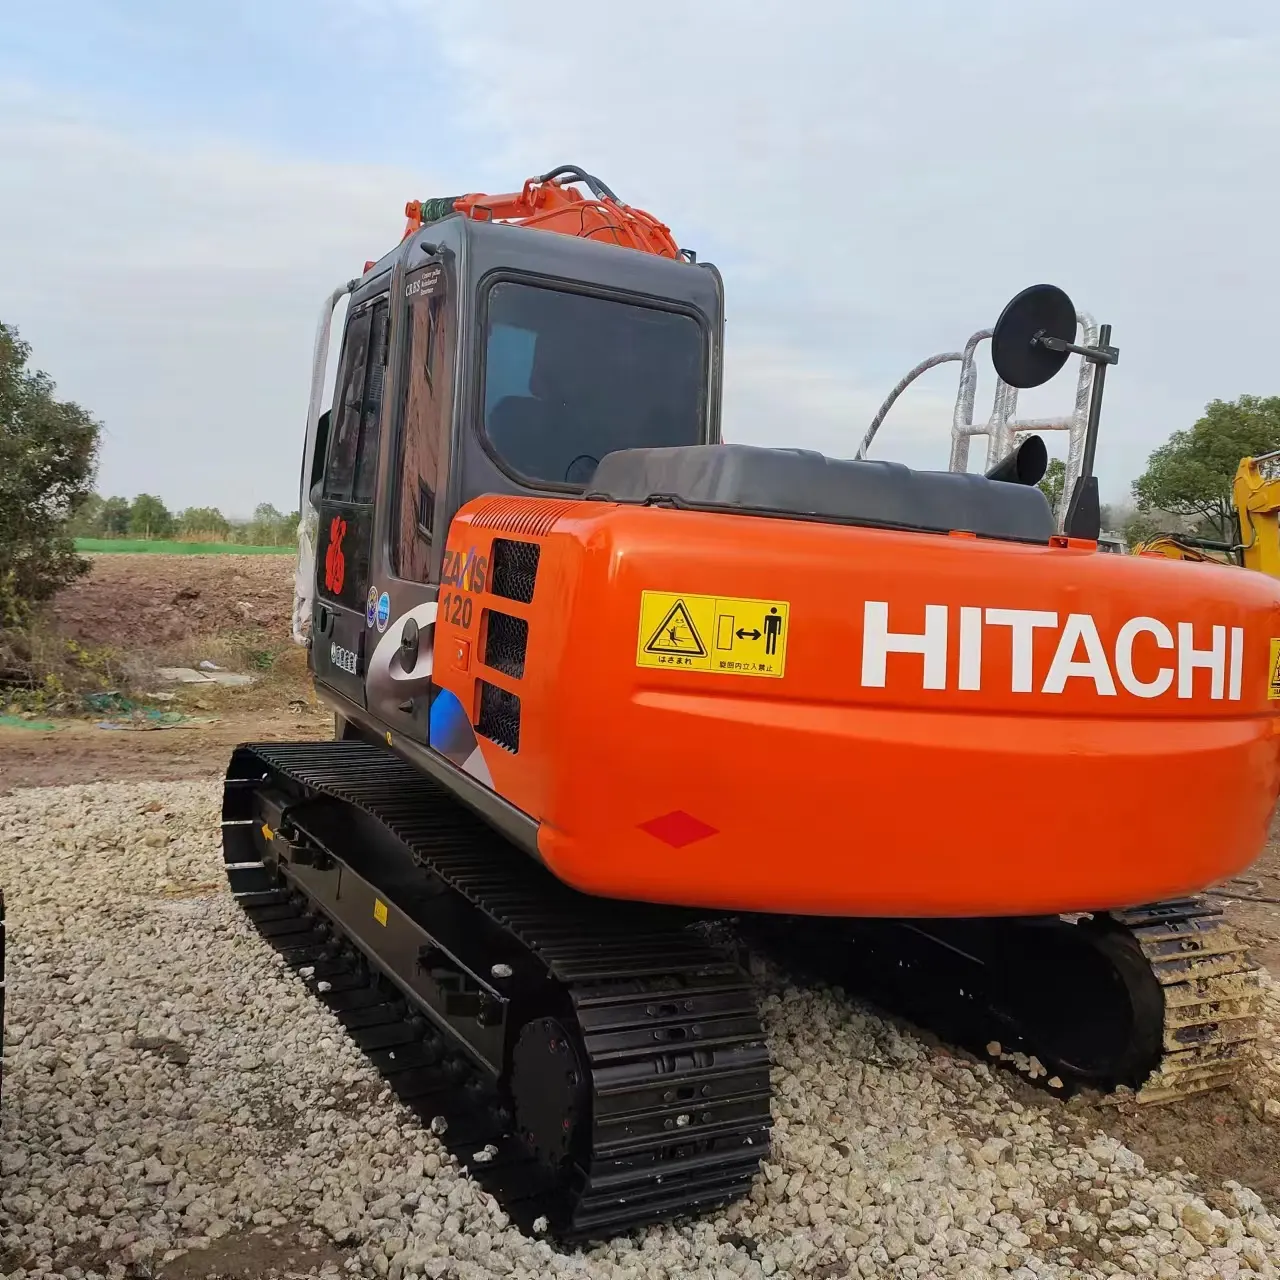 Hitachi 120/12Ton รถขุดตีนตะขาบมือสอง รถขุด ราคาต่ํา การก่อสร้างฟาร์ม การเคลื่อนย้ายดิน เครื่องขุดมือสอง ประสิทธิภาพสูง